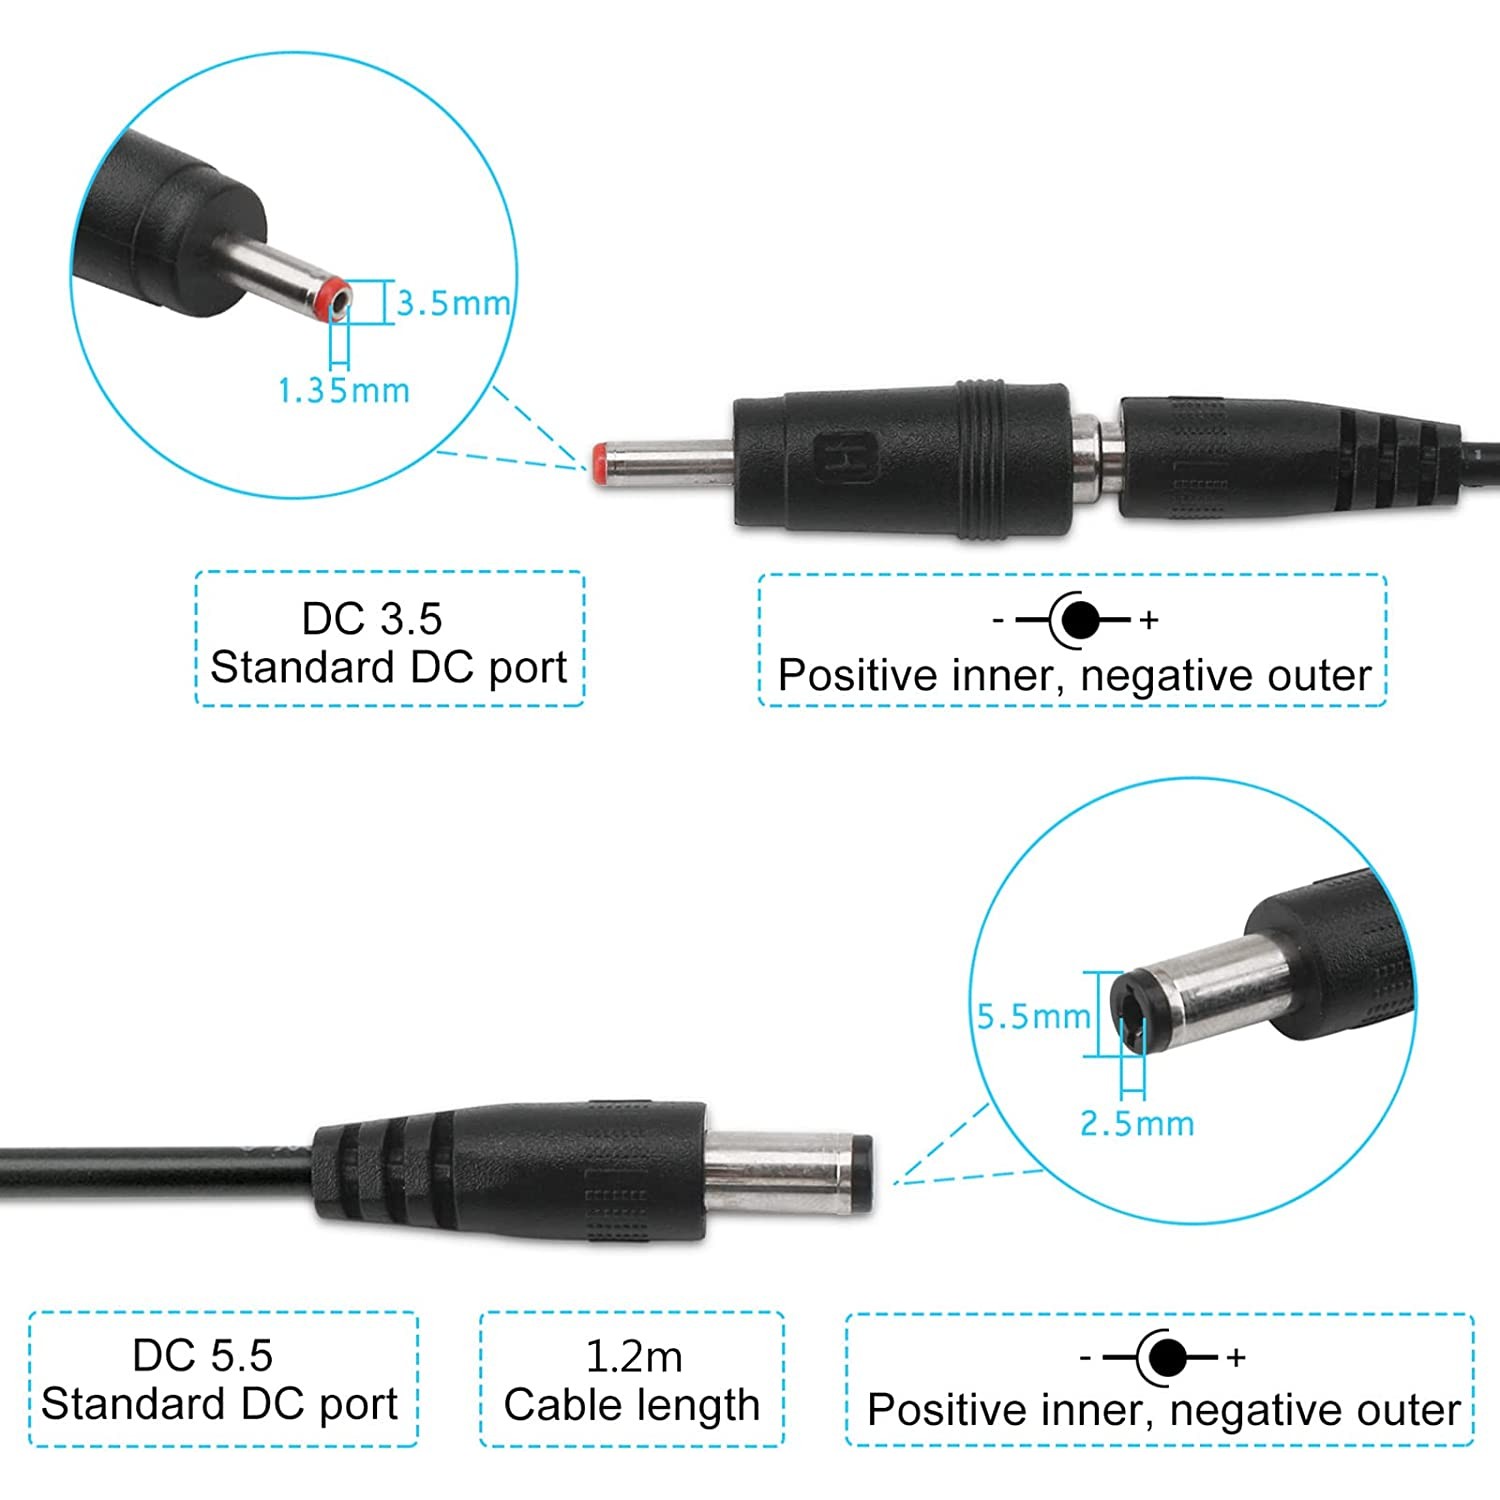 USB to 9v, DROK 5v to 9v USB Boost Converter, USB Cable DC 5v Step